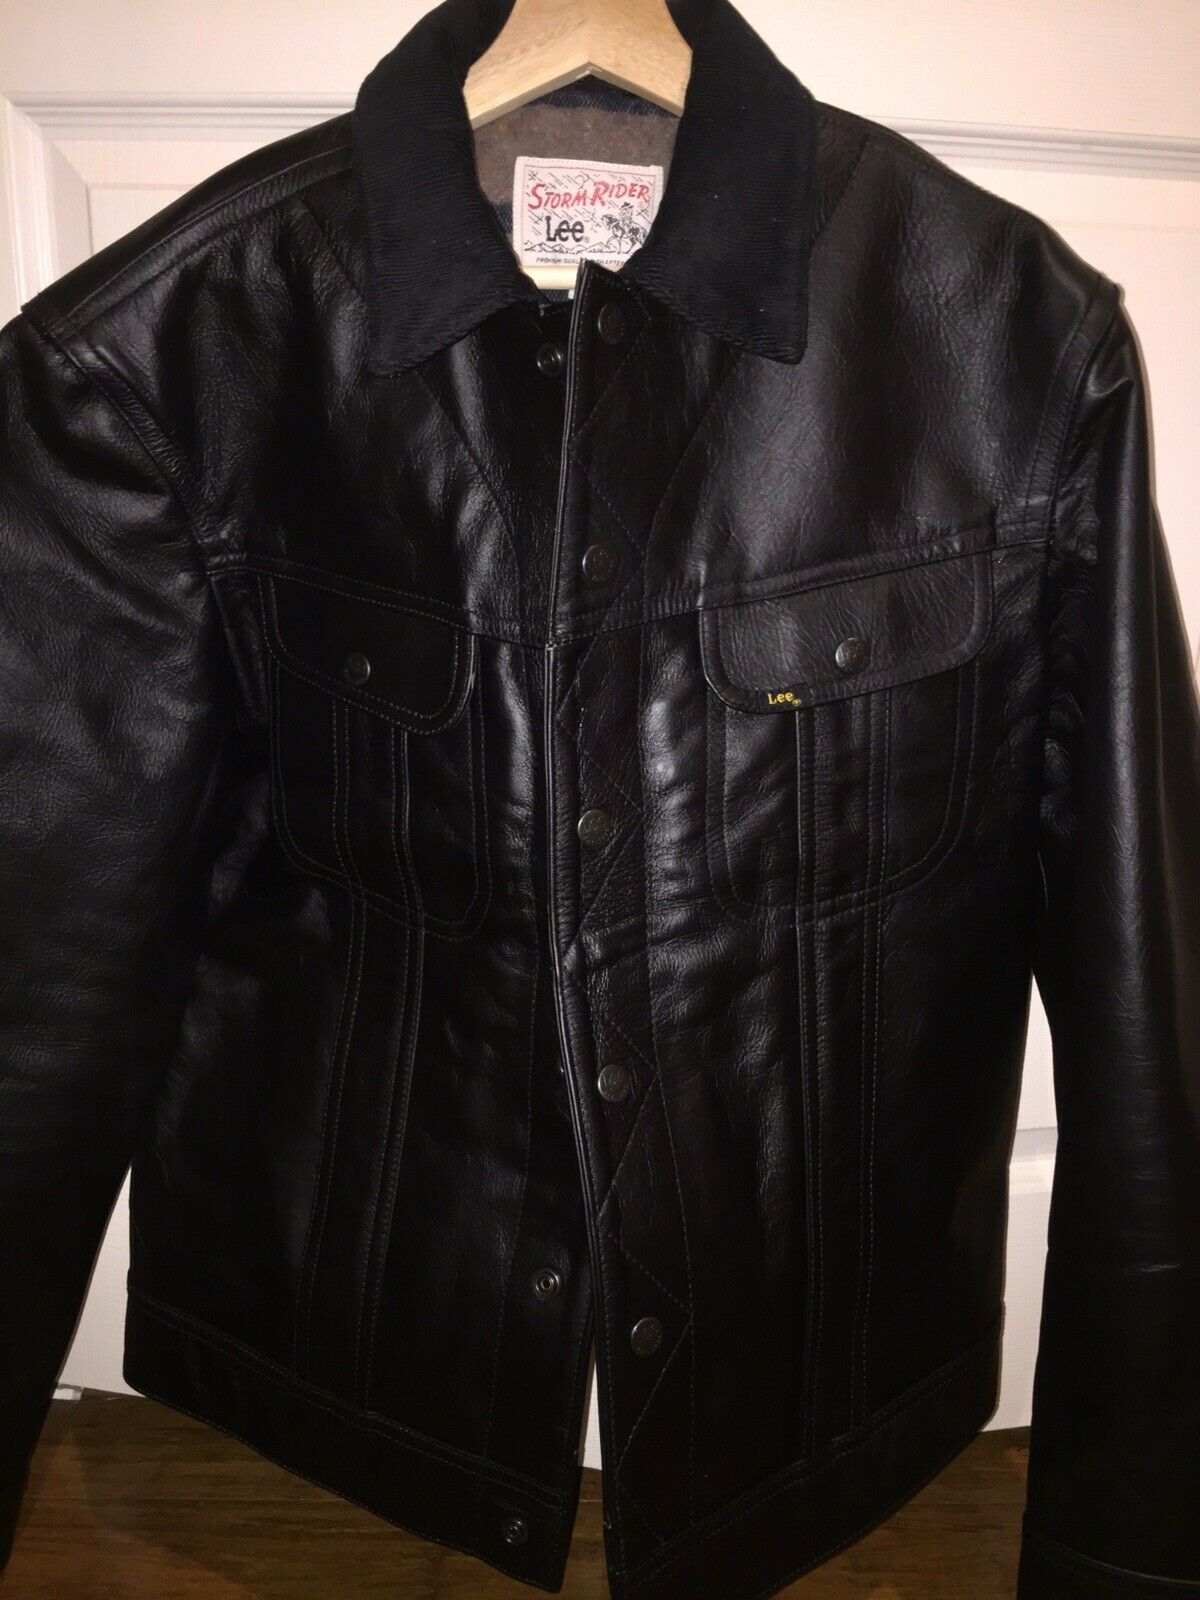 Lee 101 Leather Storm Rider Leather Jacket | The Fedora Lounge